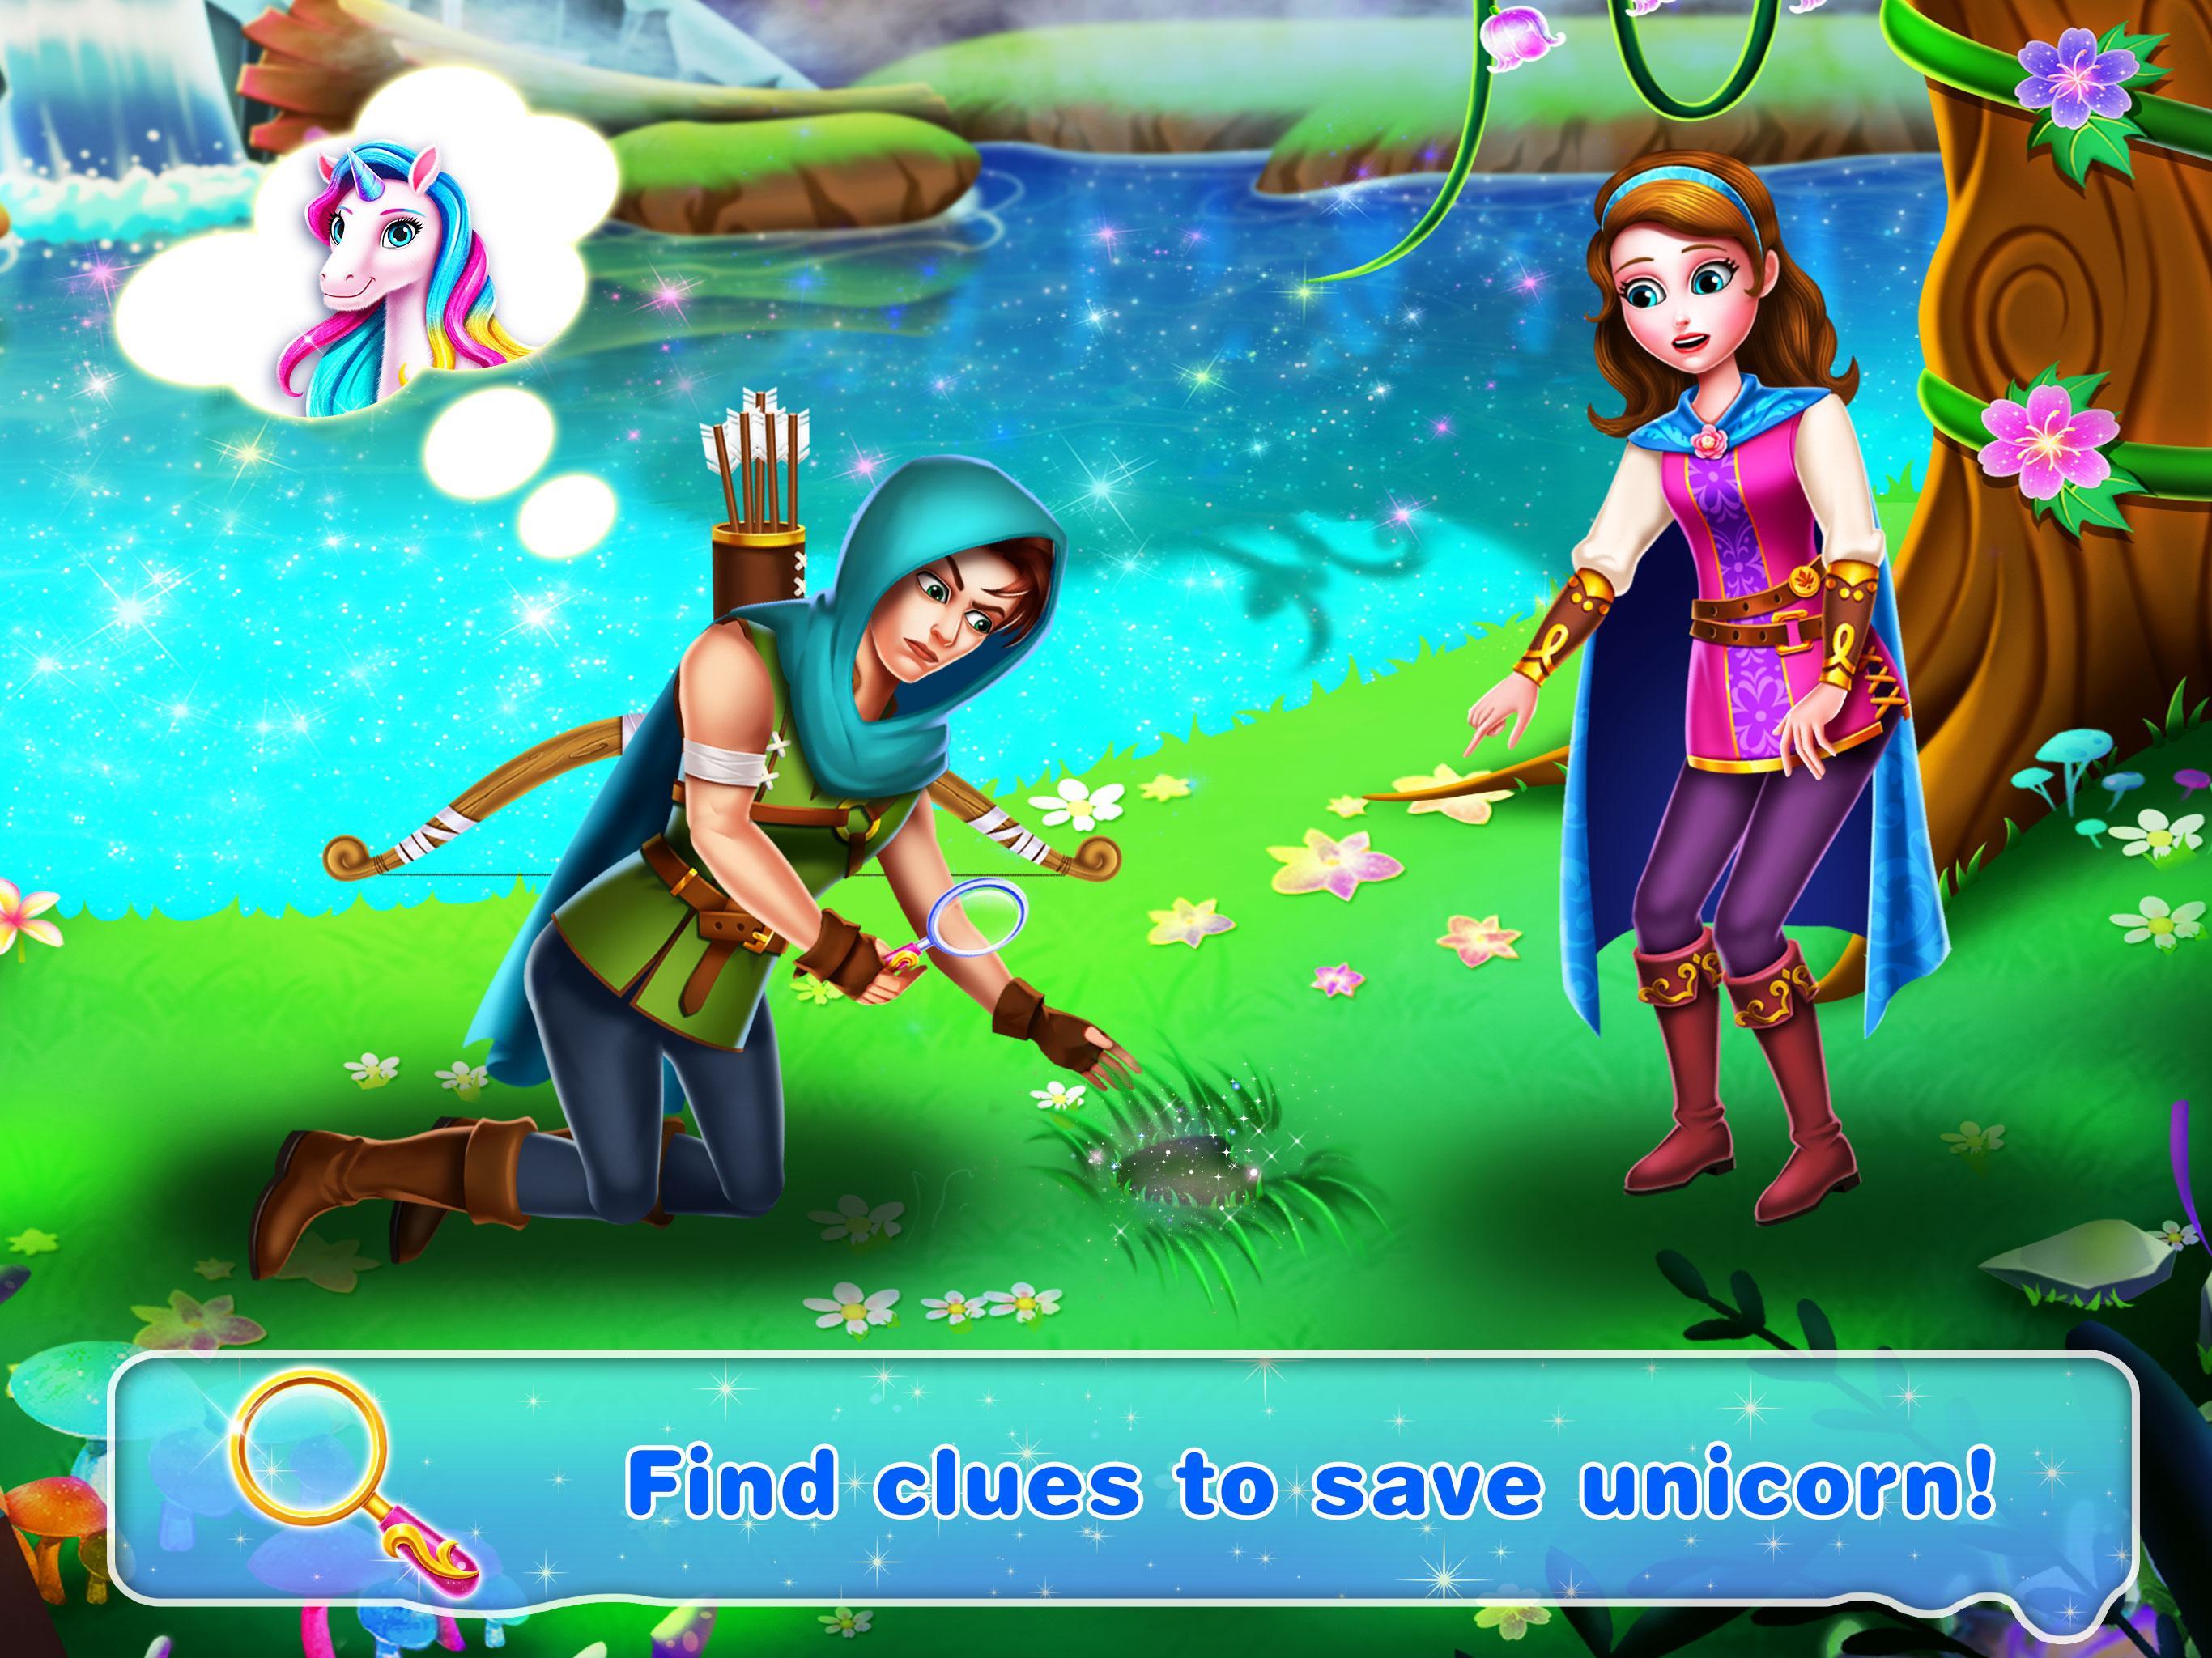 Unicorn Princess 6 – Princess Rescue Salon Games for Android - APK Download